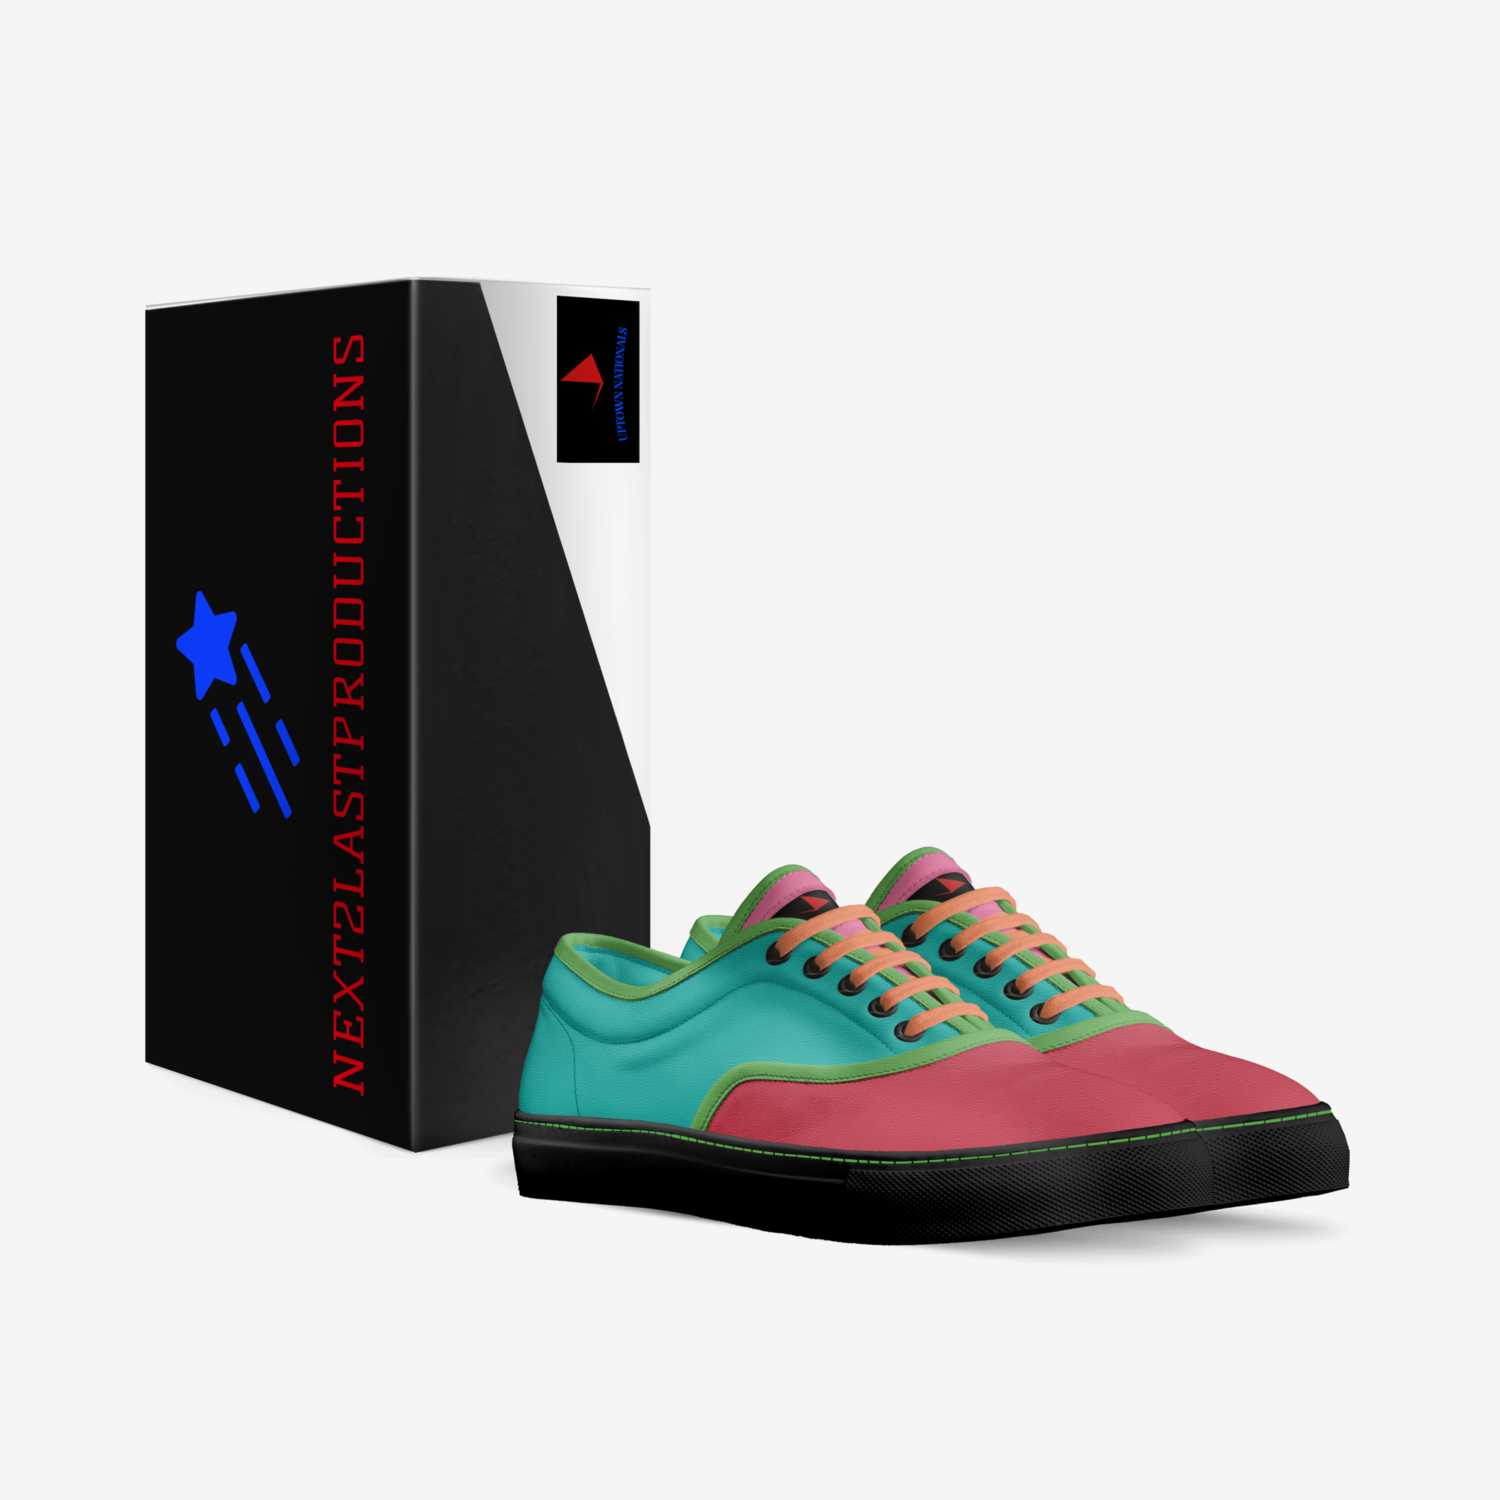 UN CIRCUS  custom made in Italy shoes by Maiya Legardye | Box view